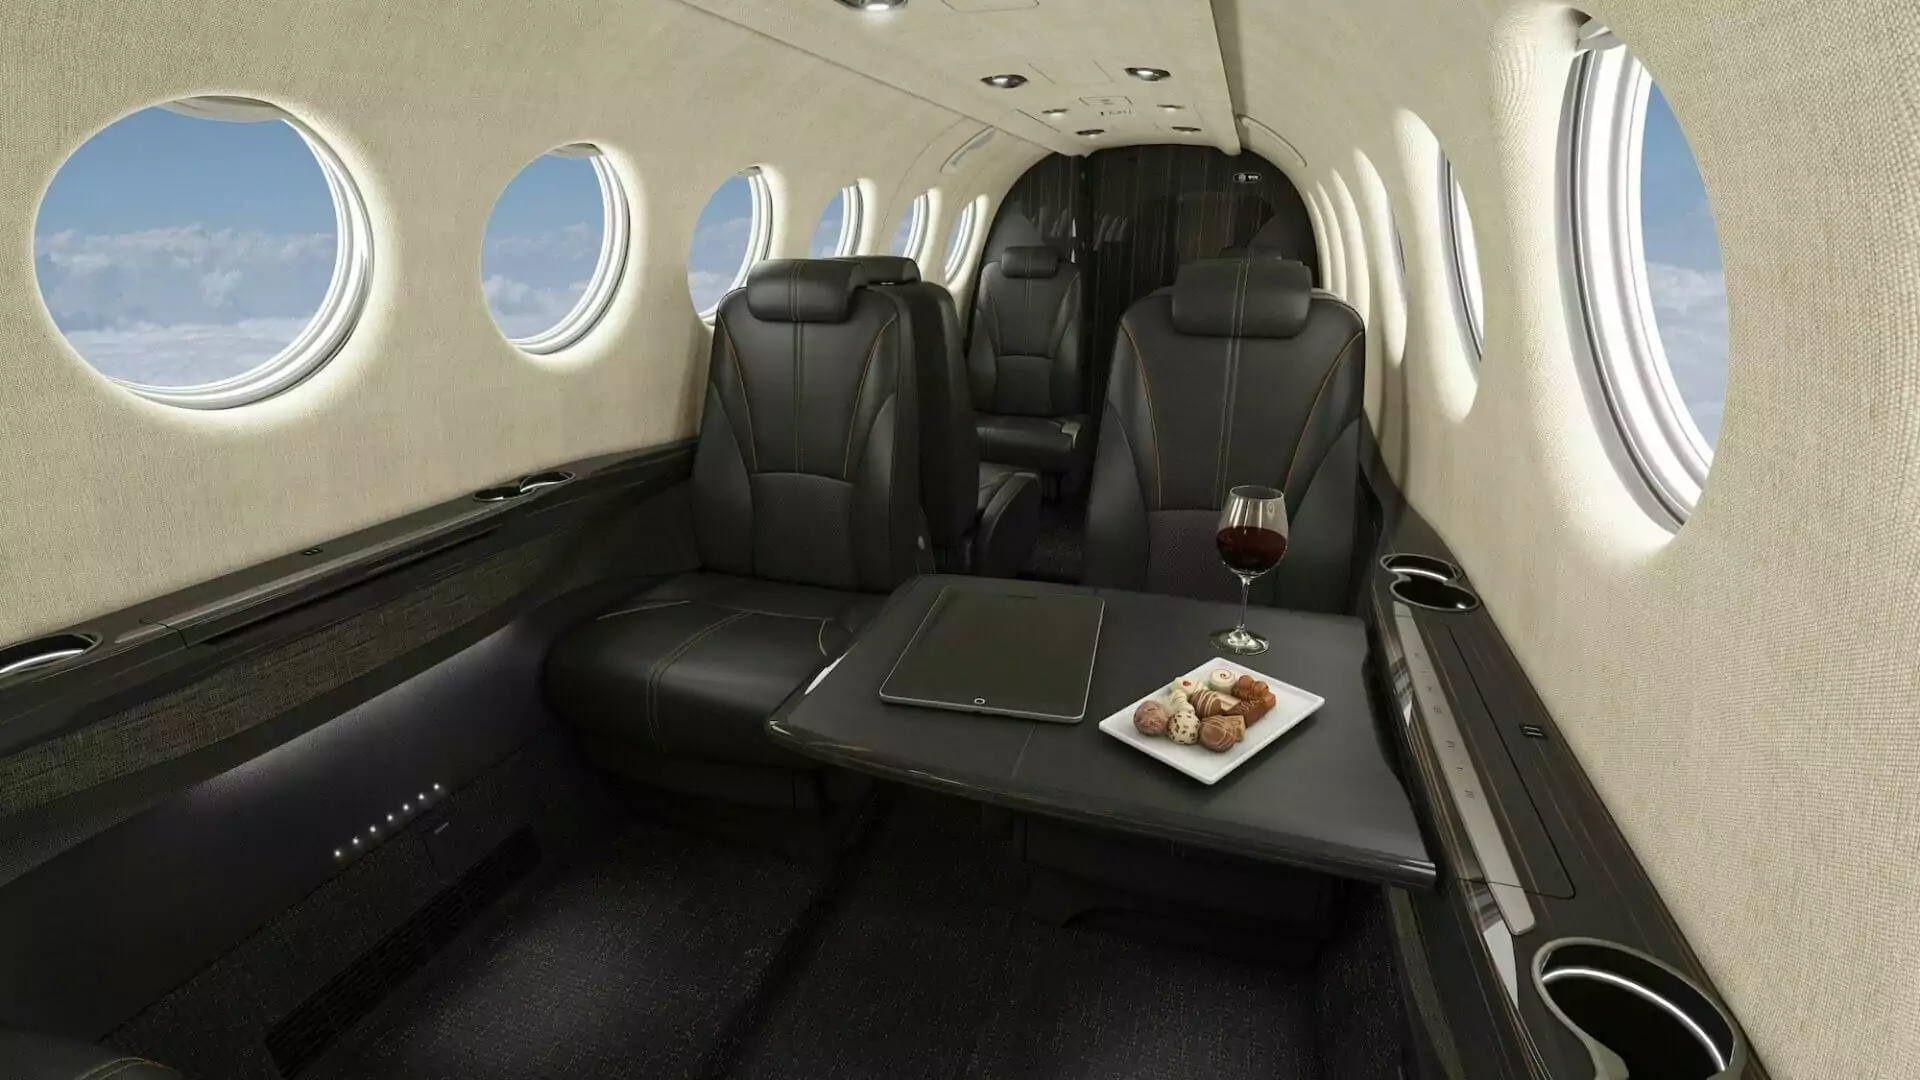 Beechcraft King Air 360 interior cabin with breakfast